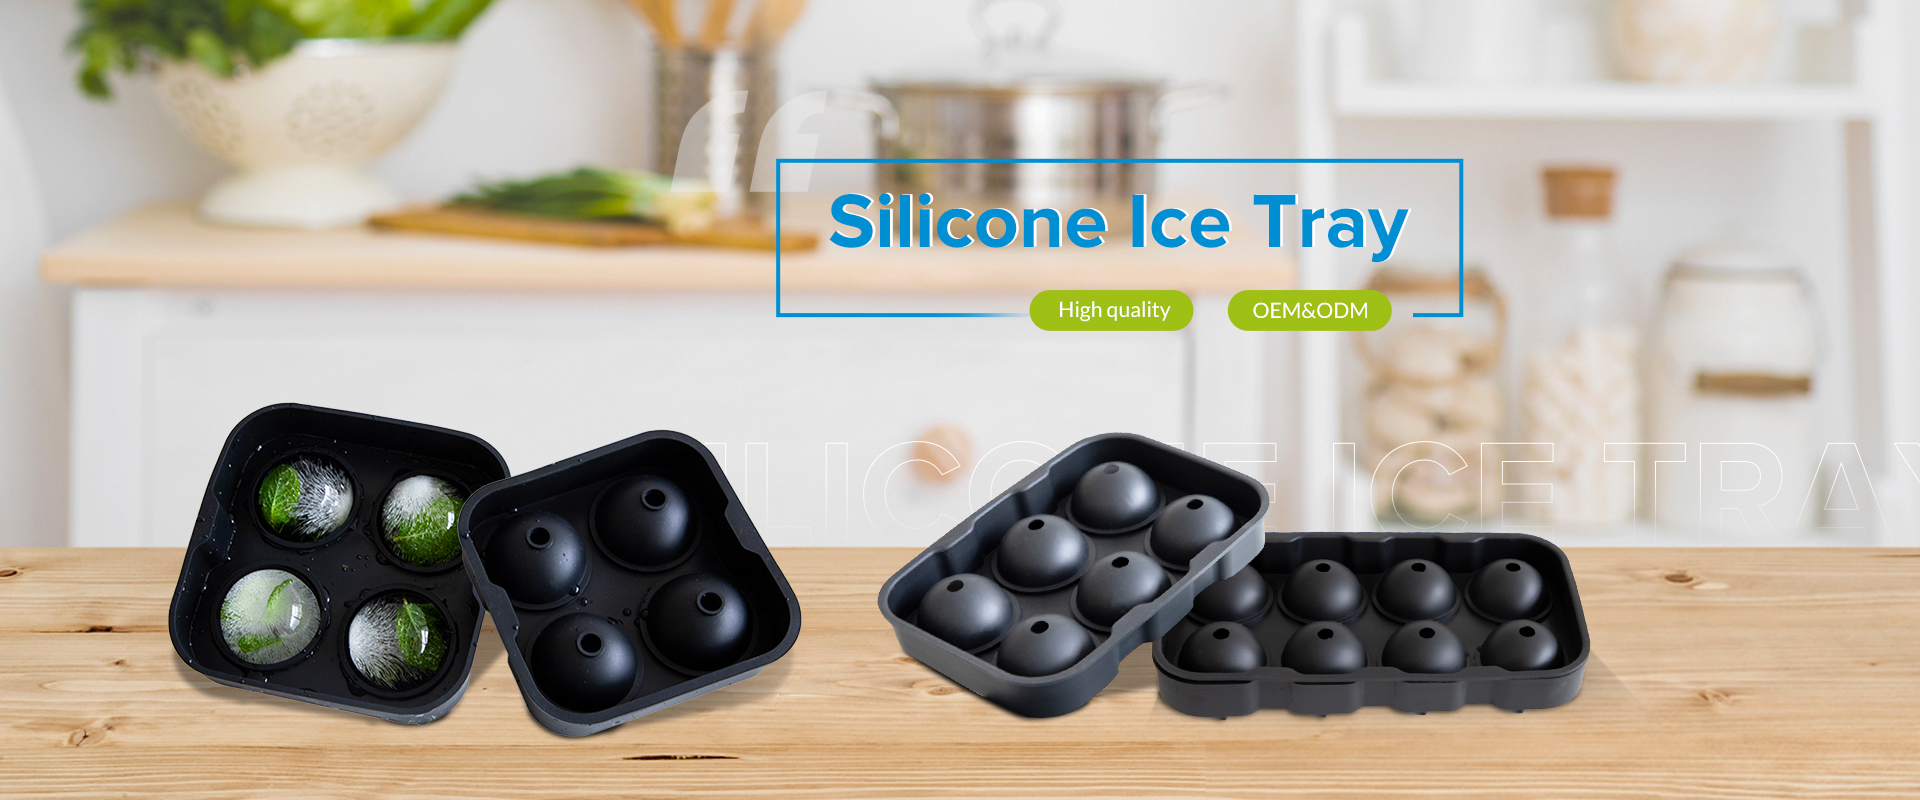 I-Silicone Ice Tray